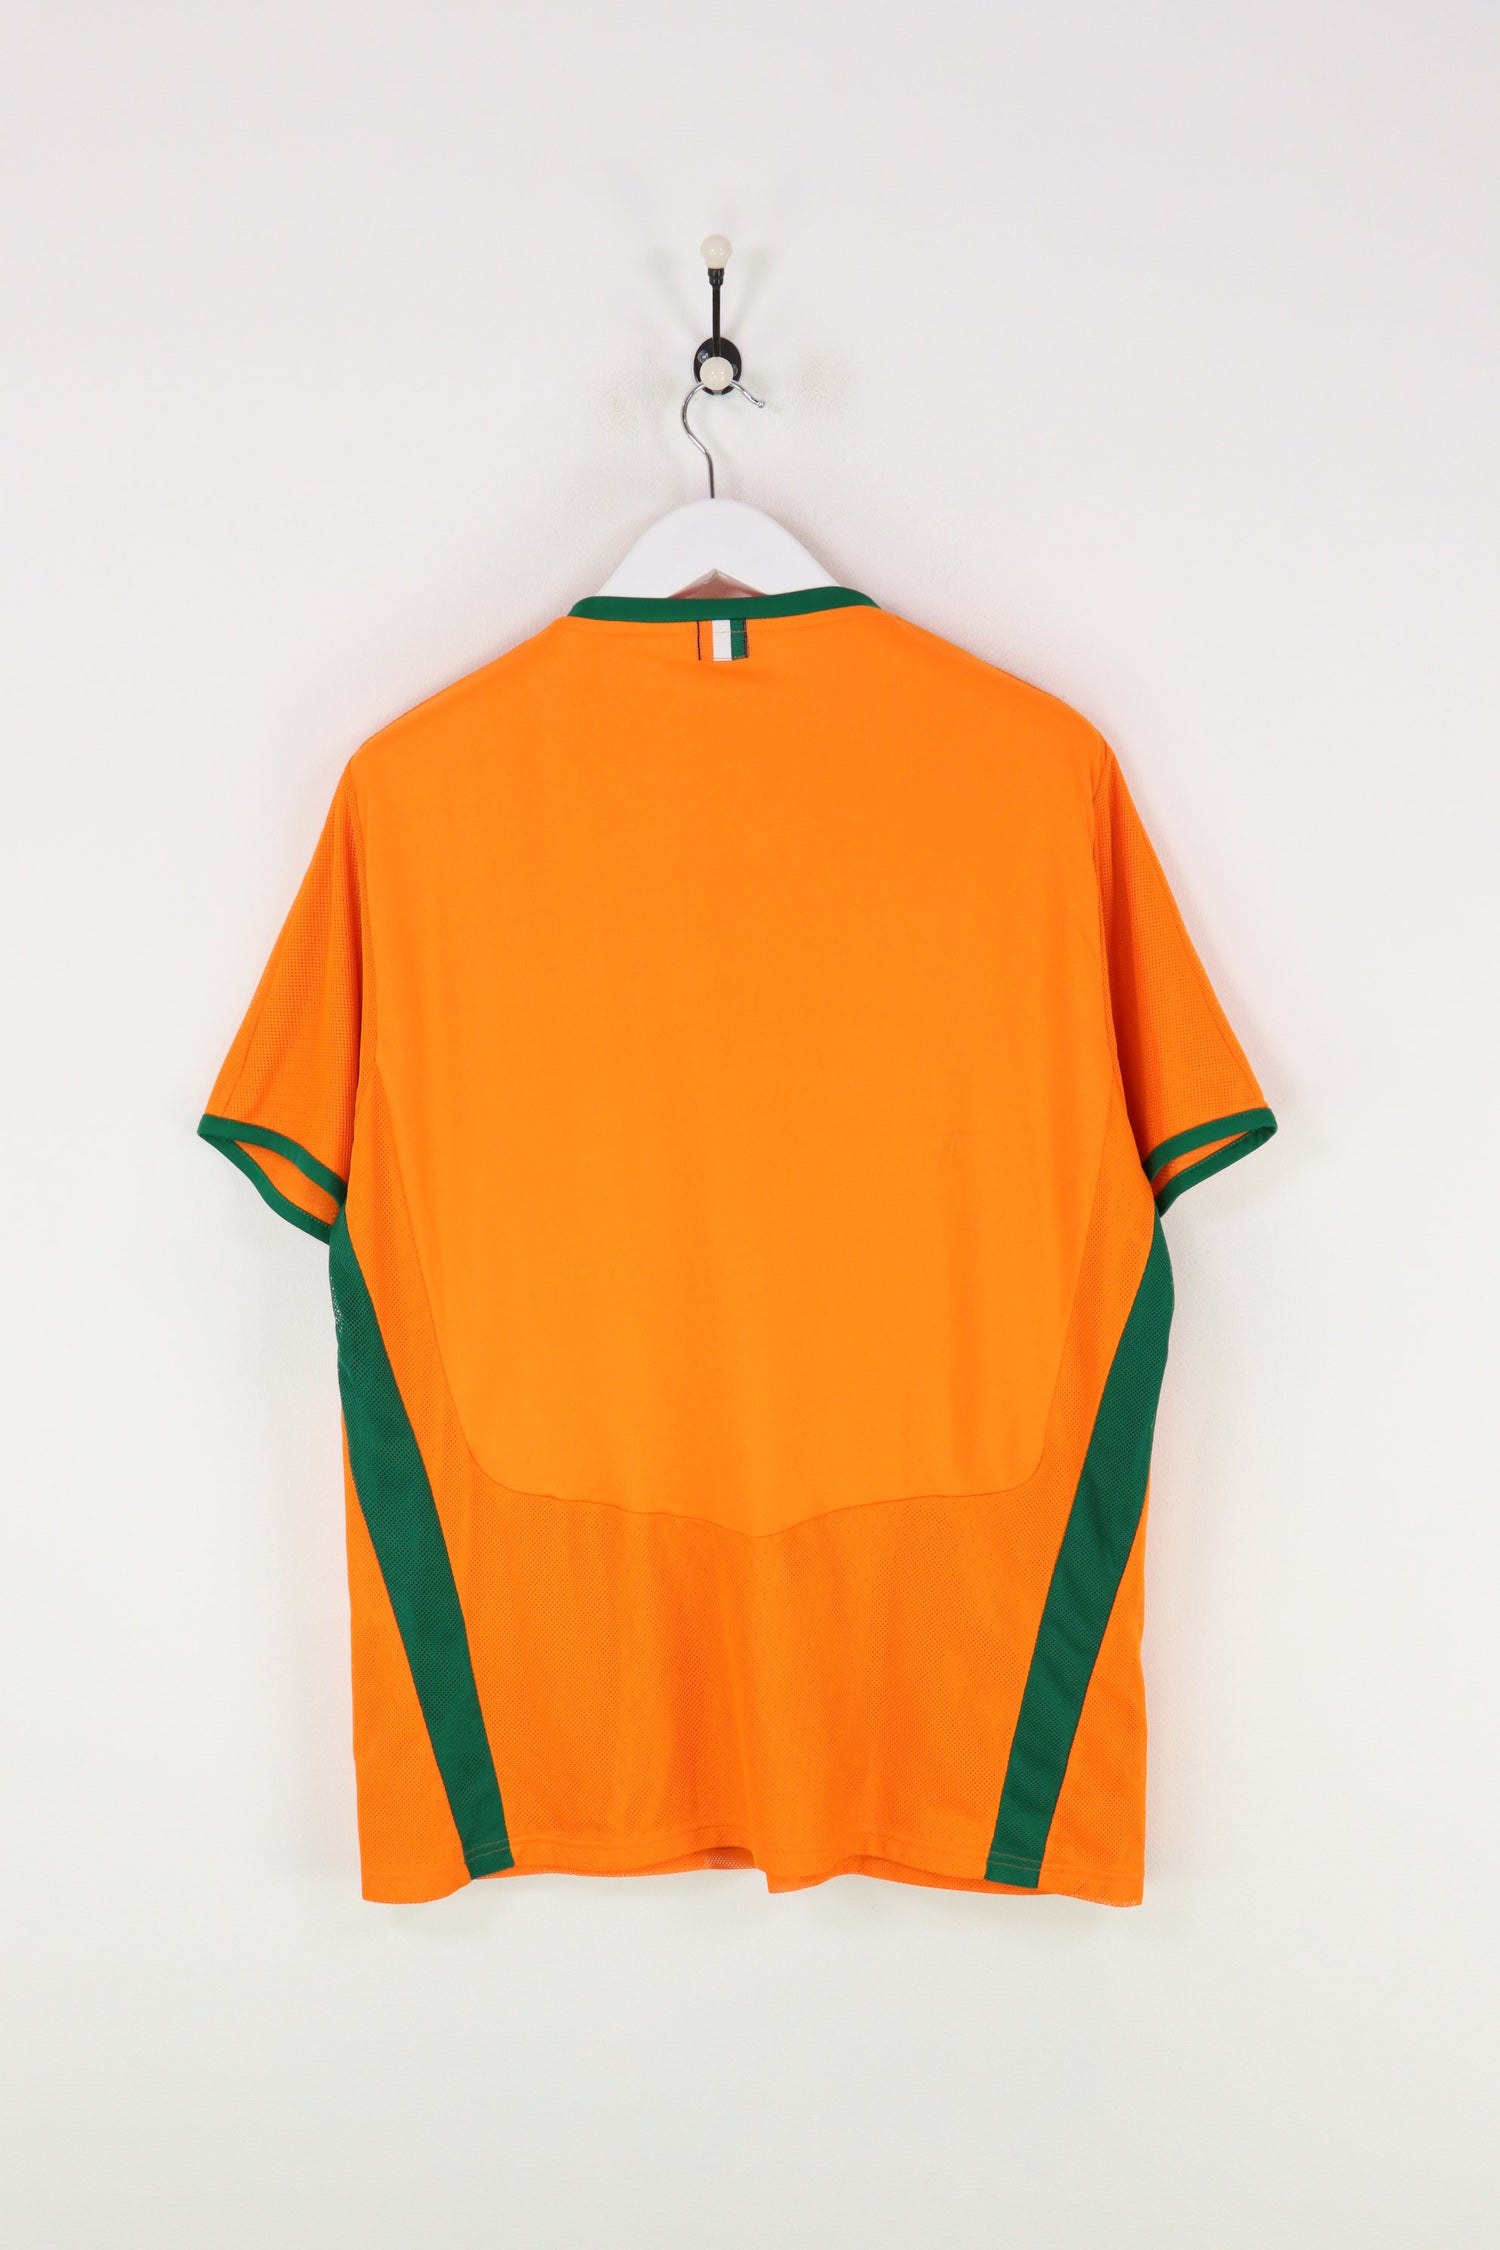 Puma Ivory Coast Football Shirt Orange XL